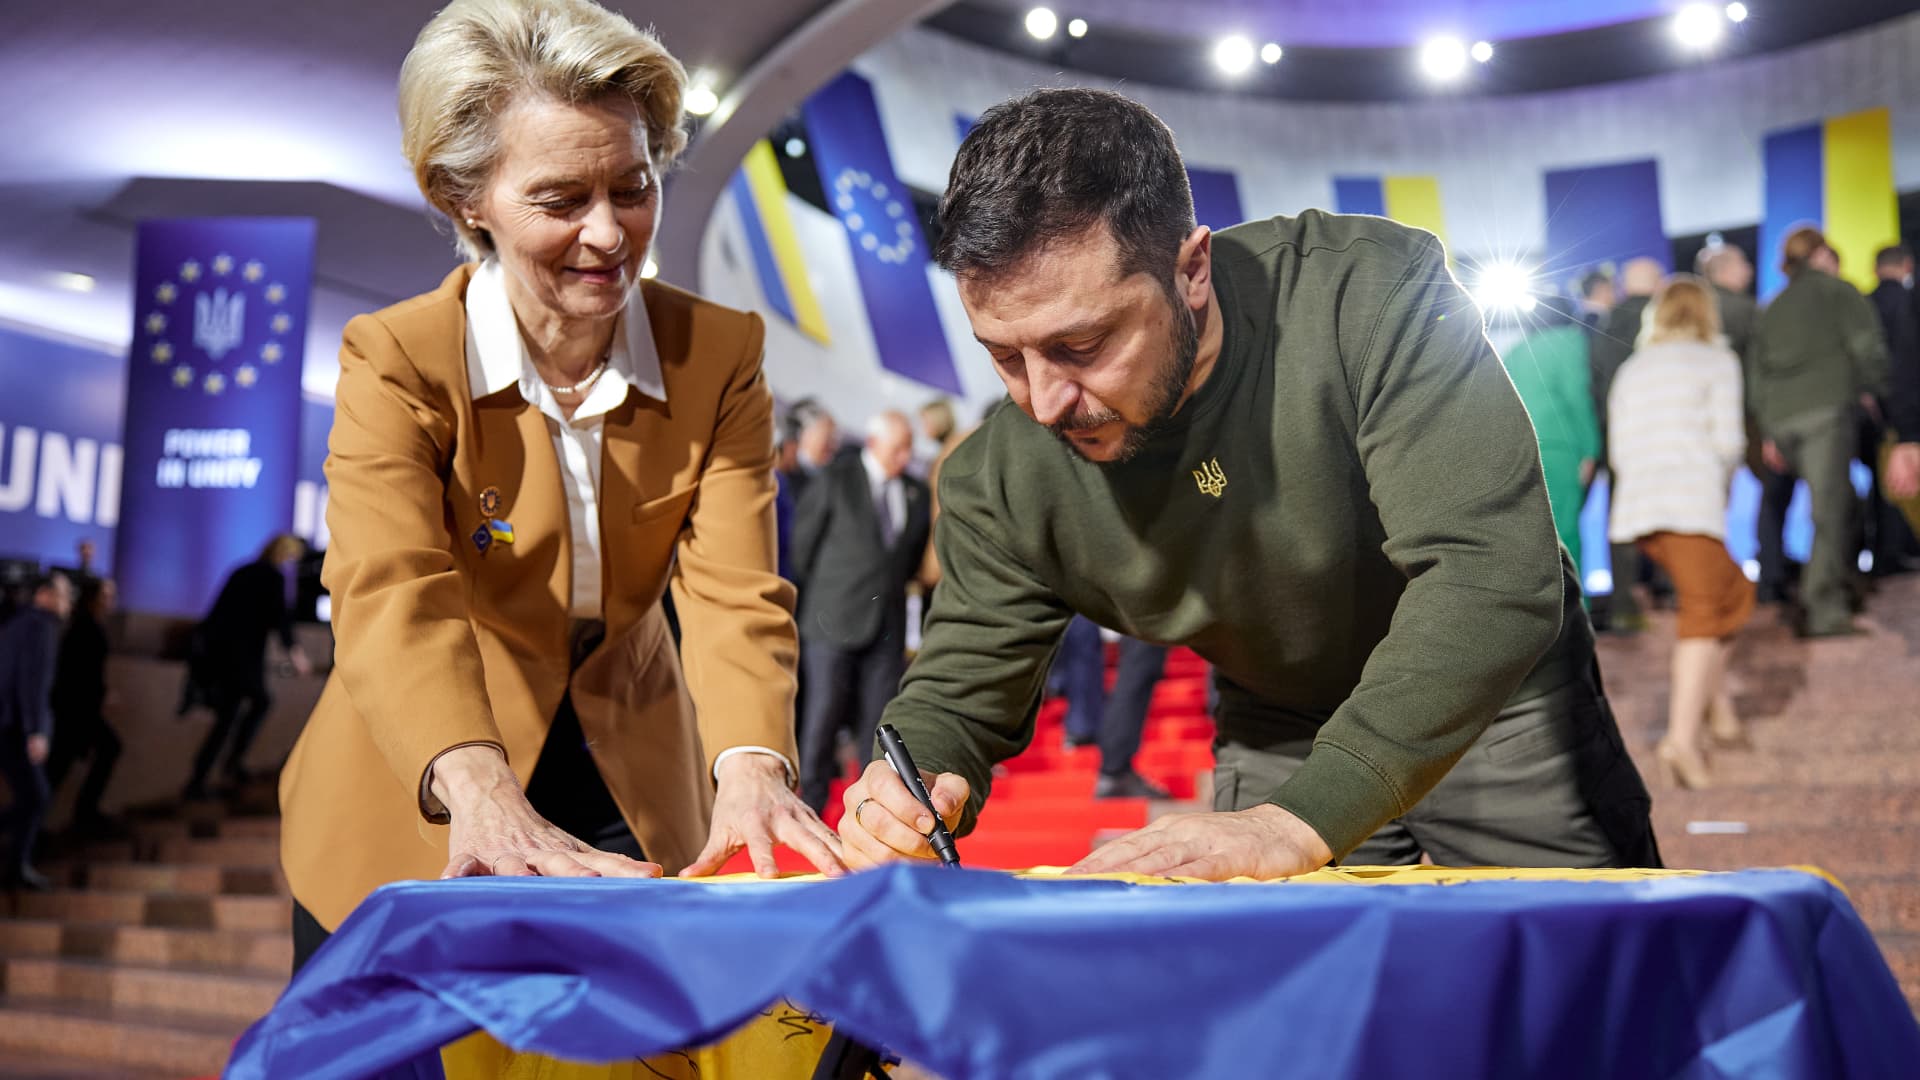 Ukrainian President Volodymyr Zelenskyy (R) and European Commission President Ursula von der Leyen (L) sign a Ukrainian flag after their meeting in Kyiv, Ukraine on February 02, 2023.